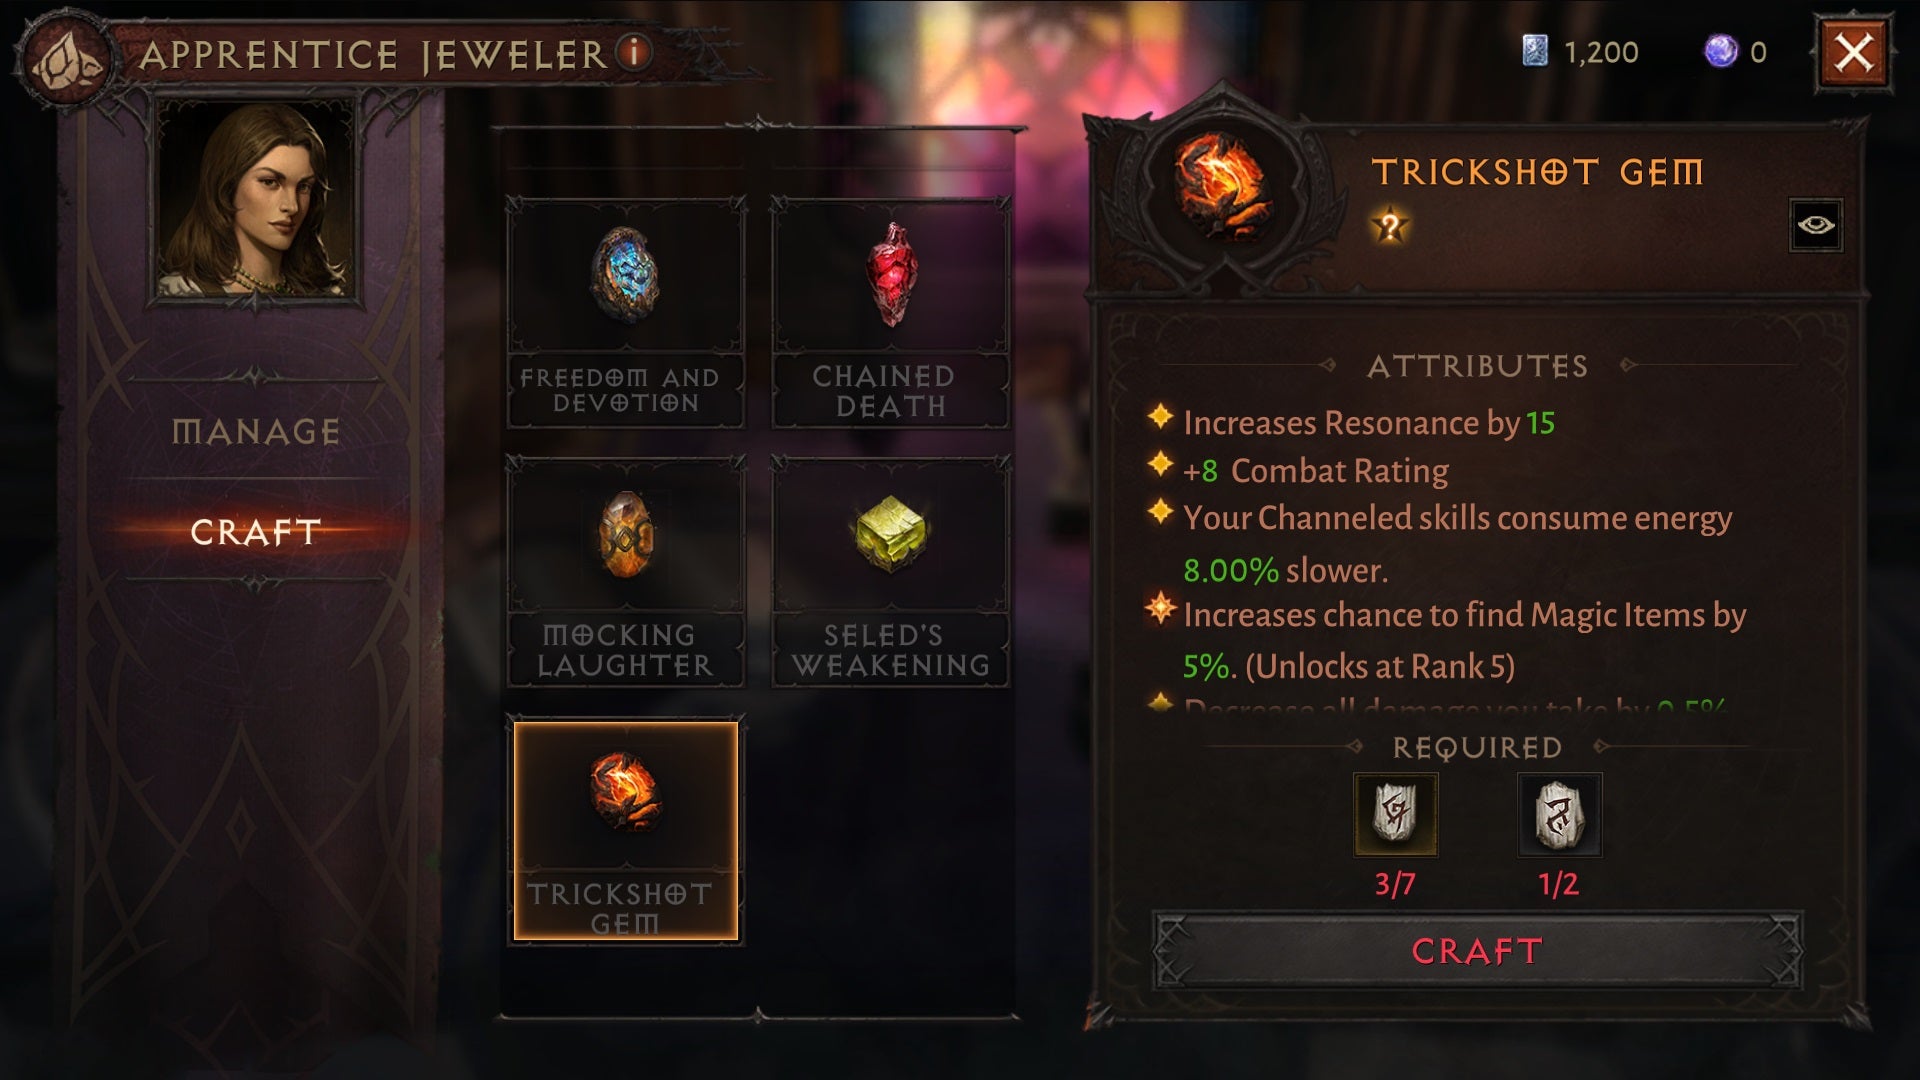 The Trickshot gem in Diablo Immortal